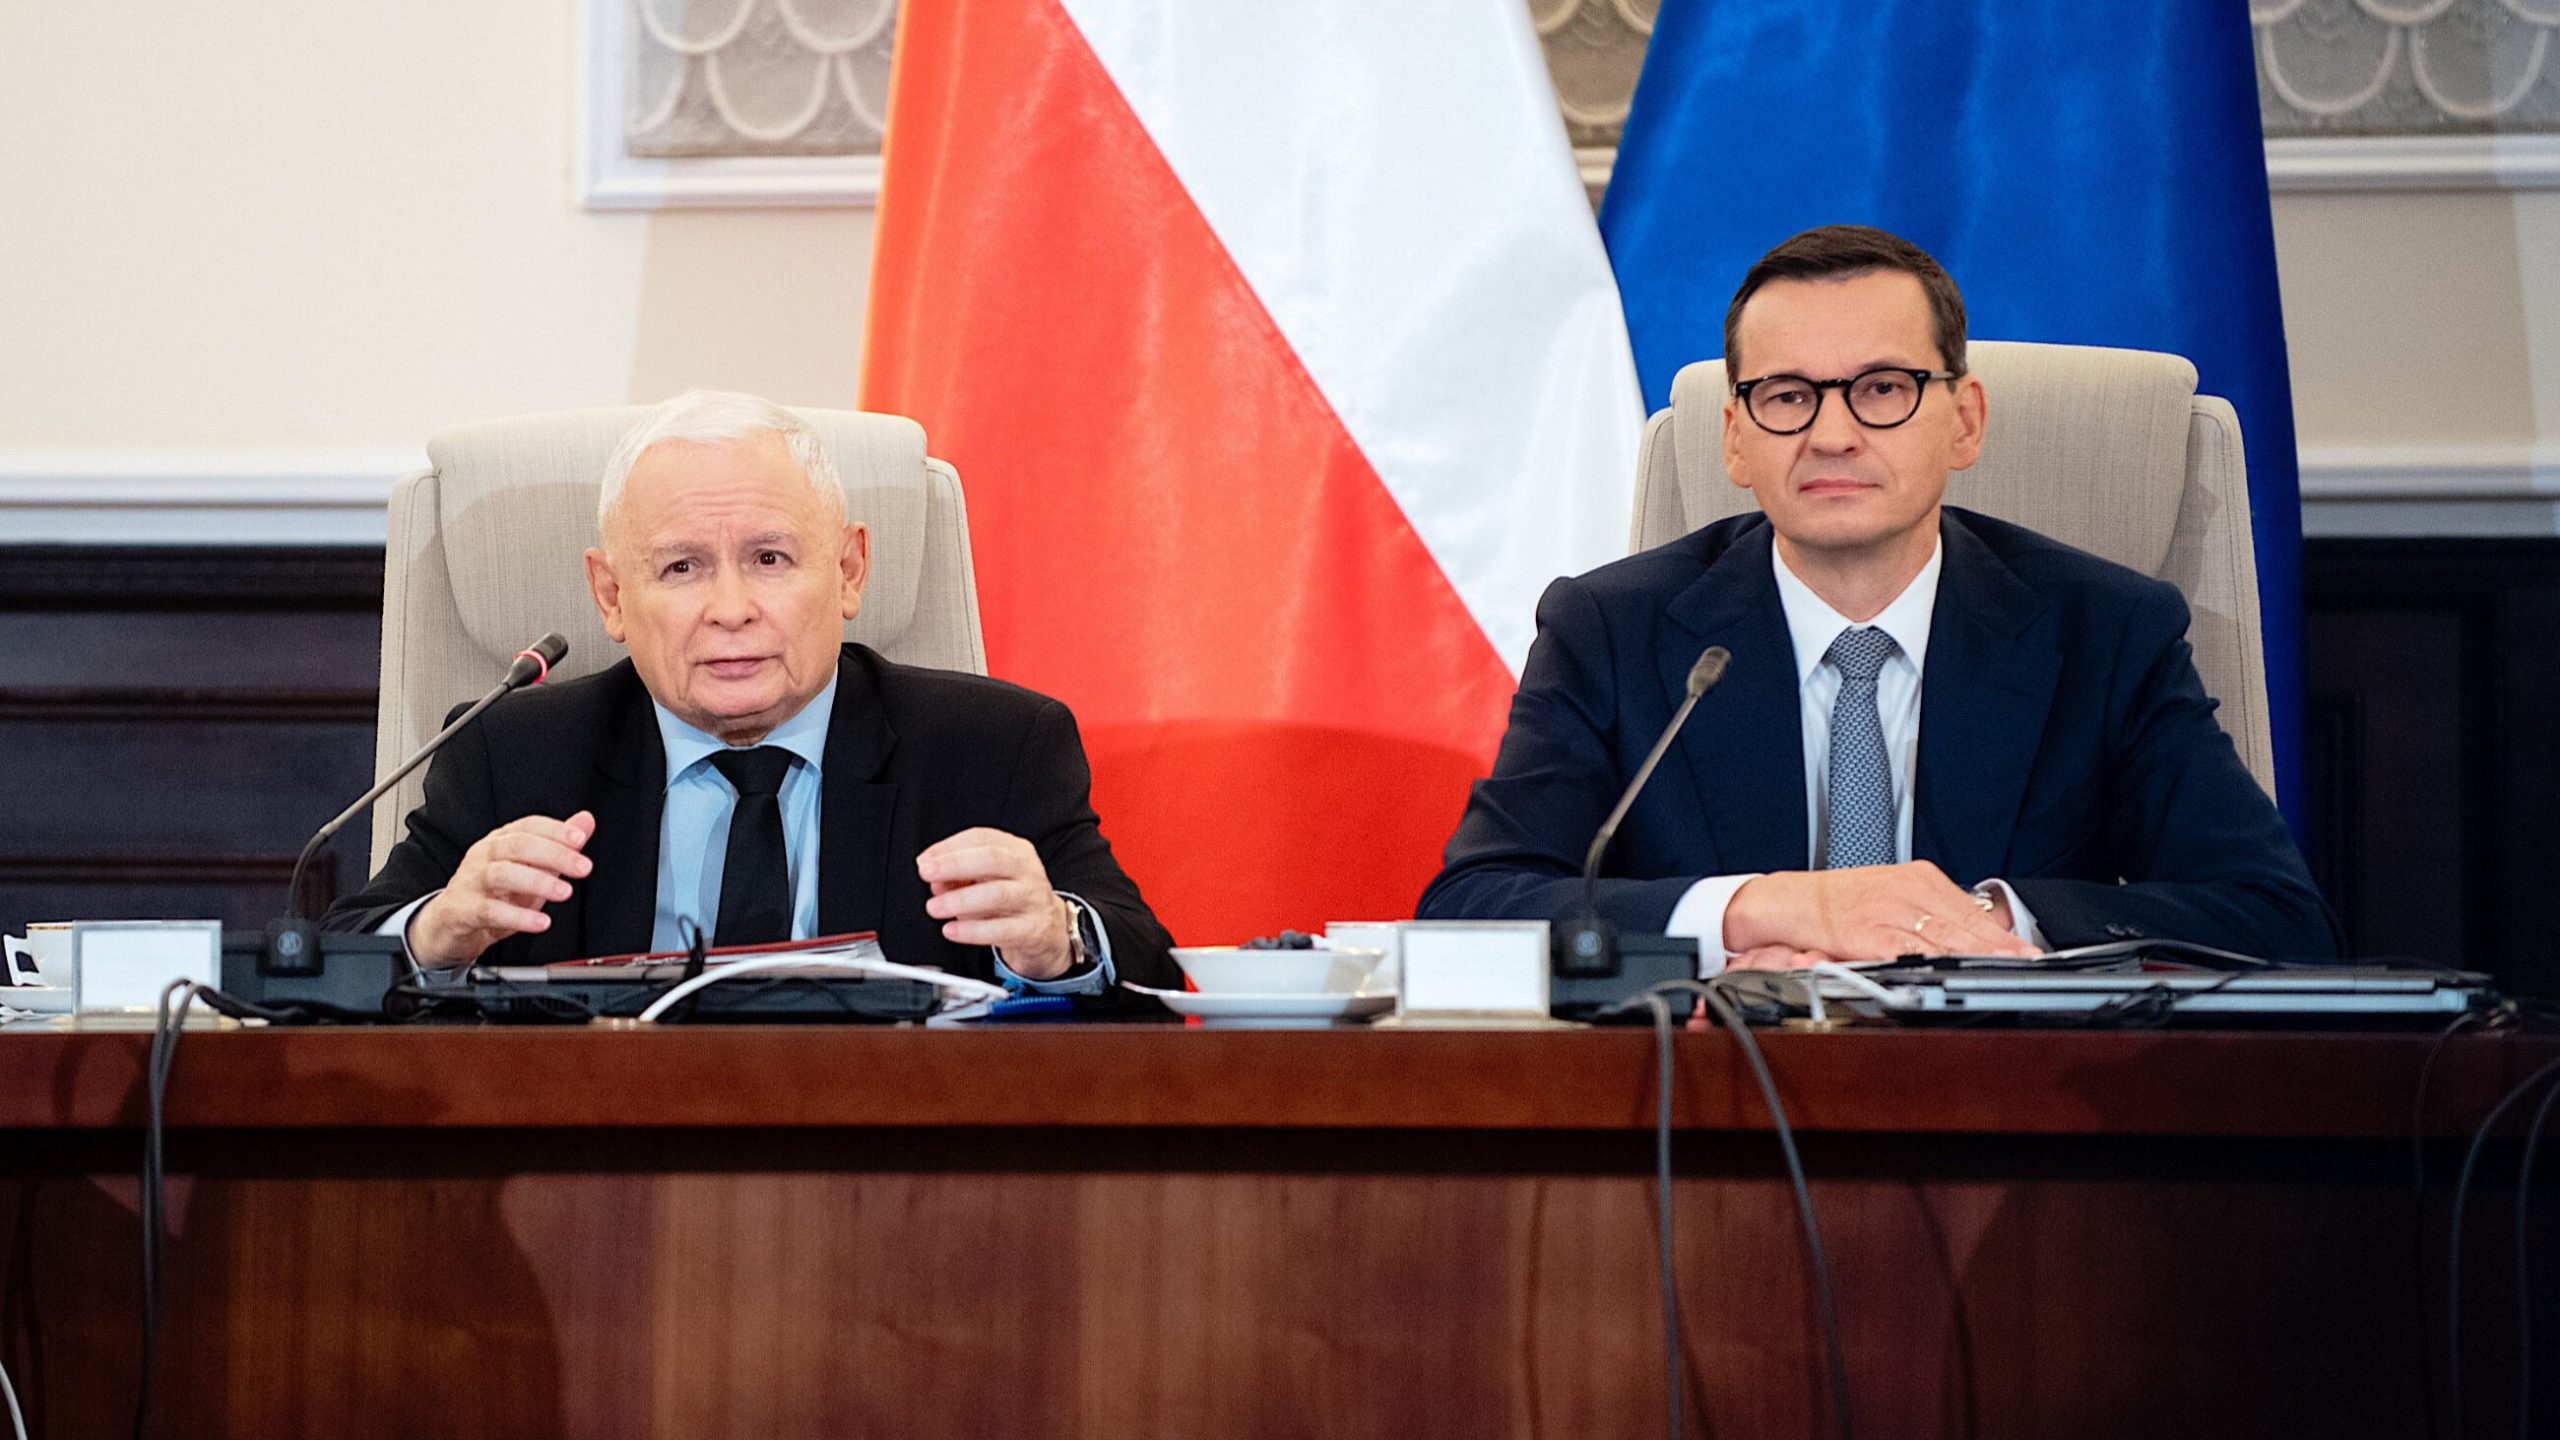 Morawiecki, Kaczyński's successor?  "I would like to take part in this honorable race"